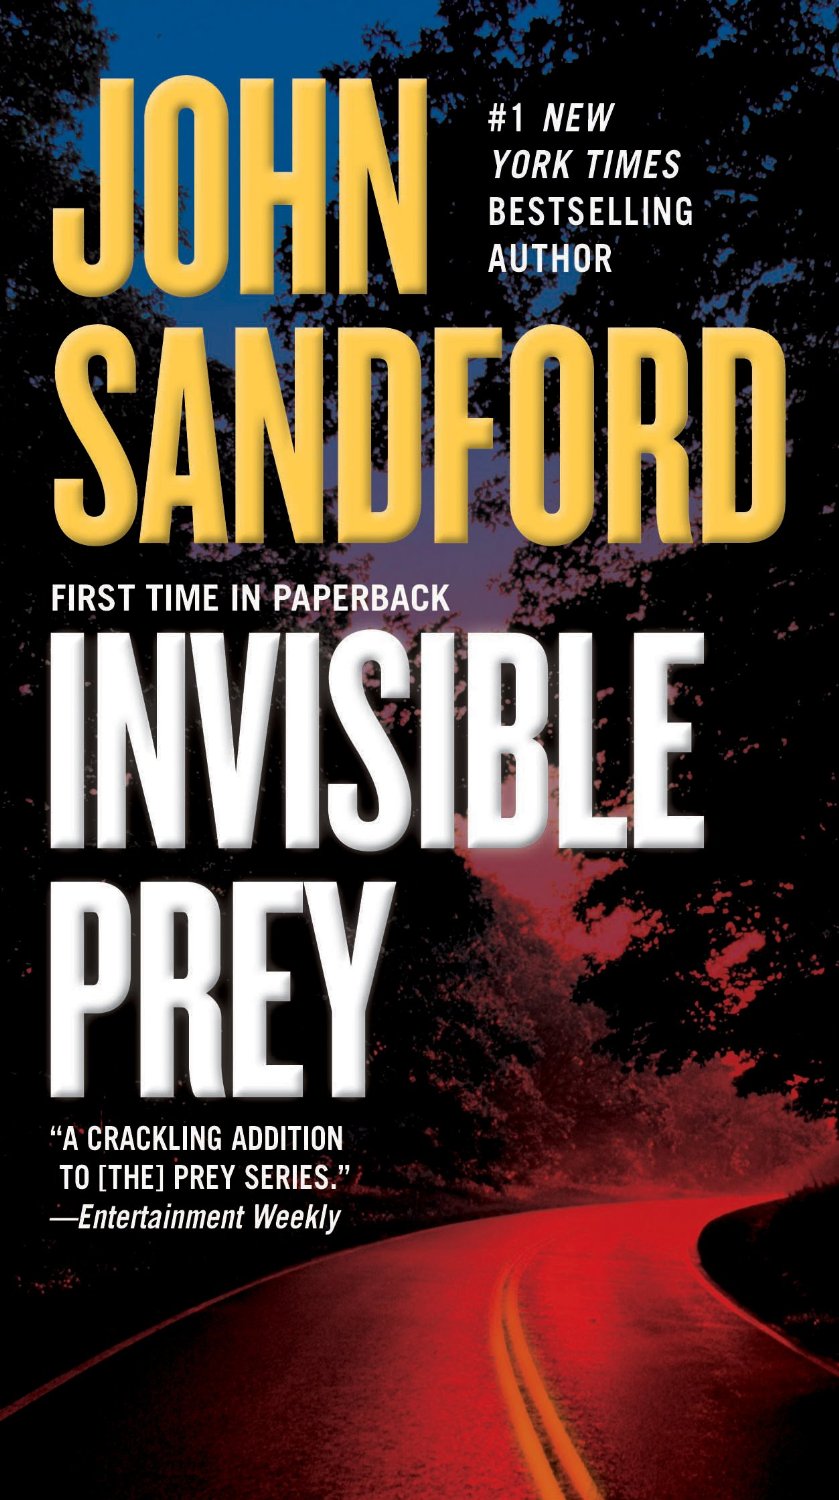 secret prey by john sandford